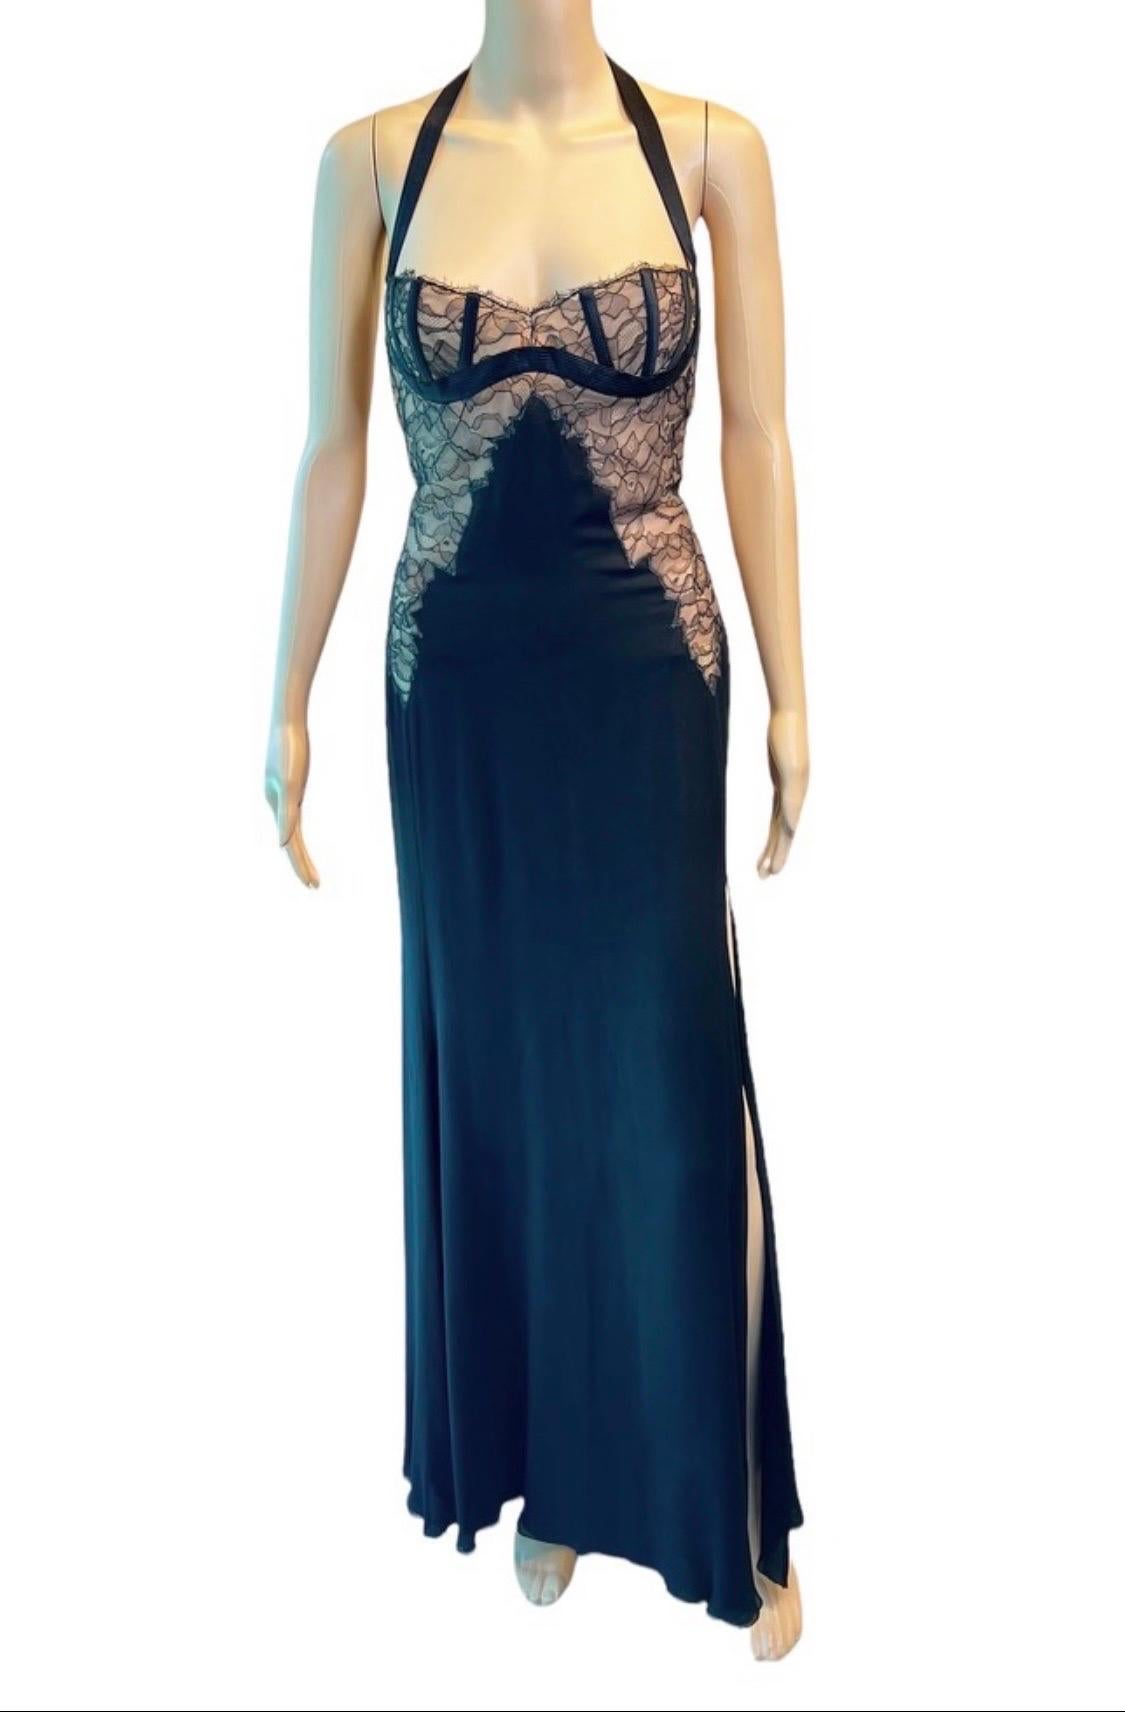 Gianni Versace S/S 1992 Bustier Lace Bra Sheer Panels Slit Evening Dress Gown Size IT 44